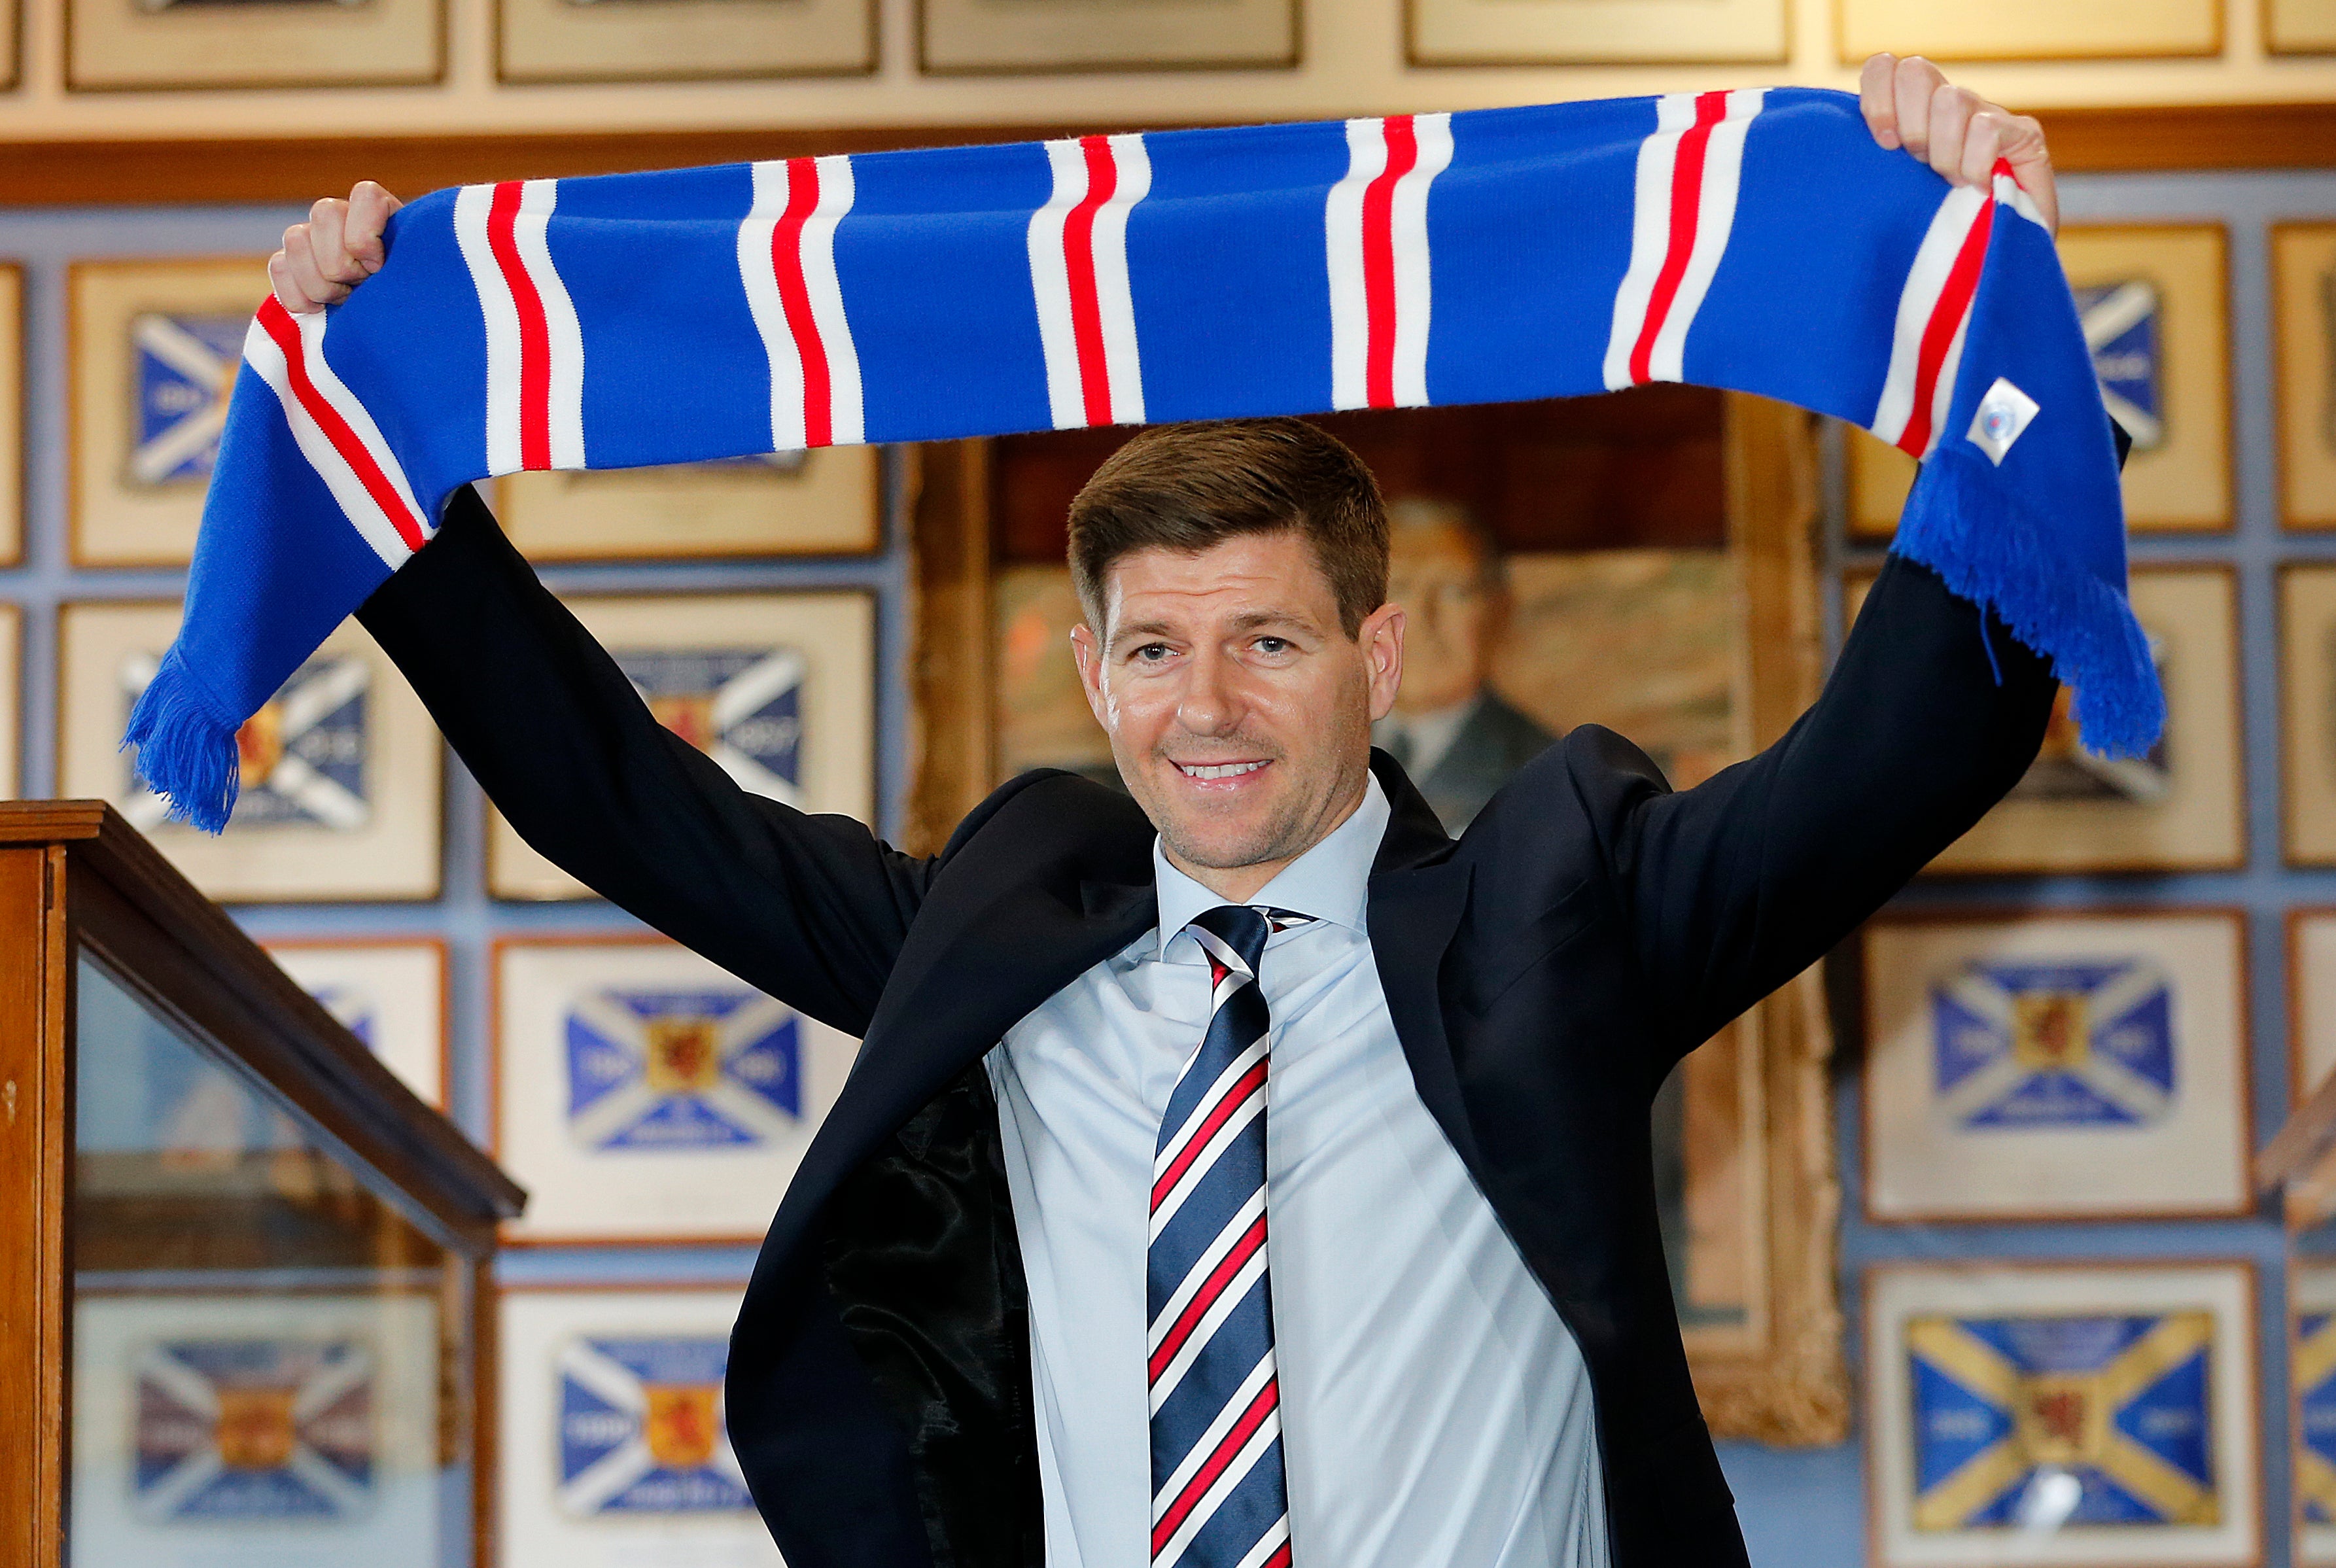 Gerrard has left Rangers for Aston Villa